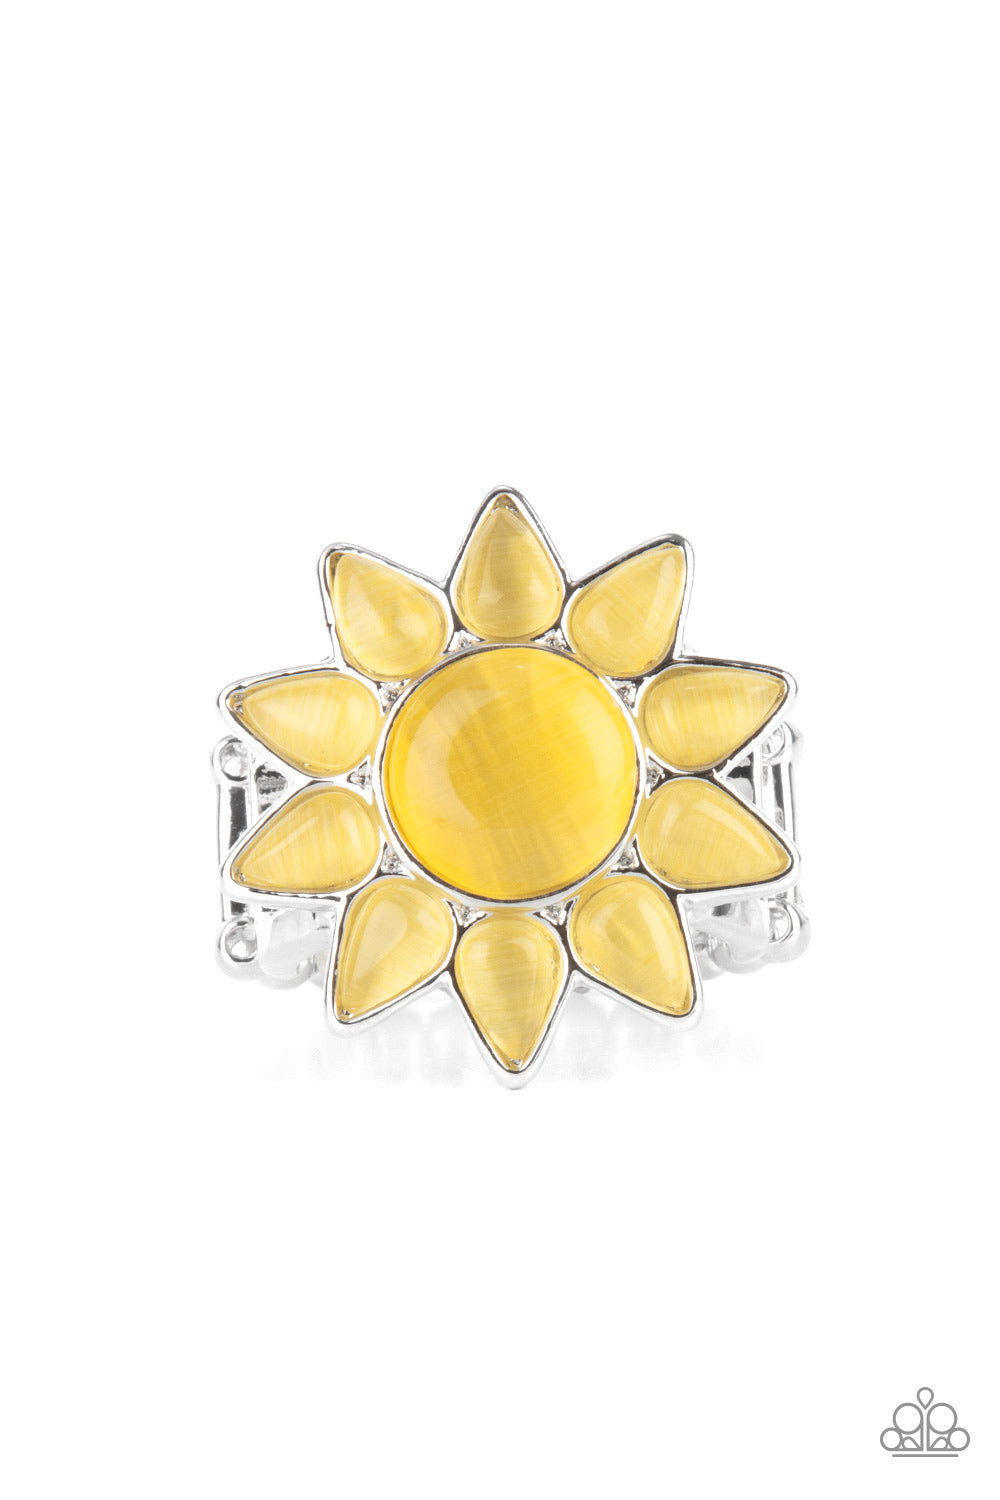 Blossoming Sunbeams - yellow - Paparazzi ring